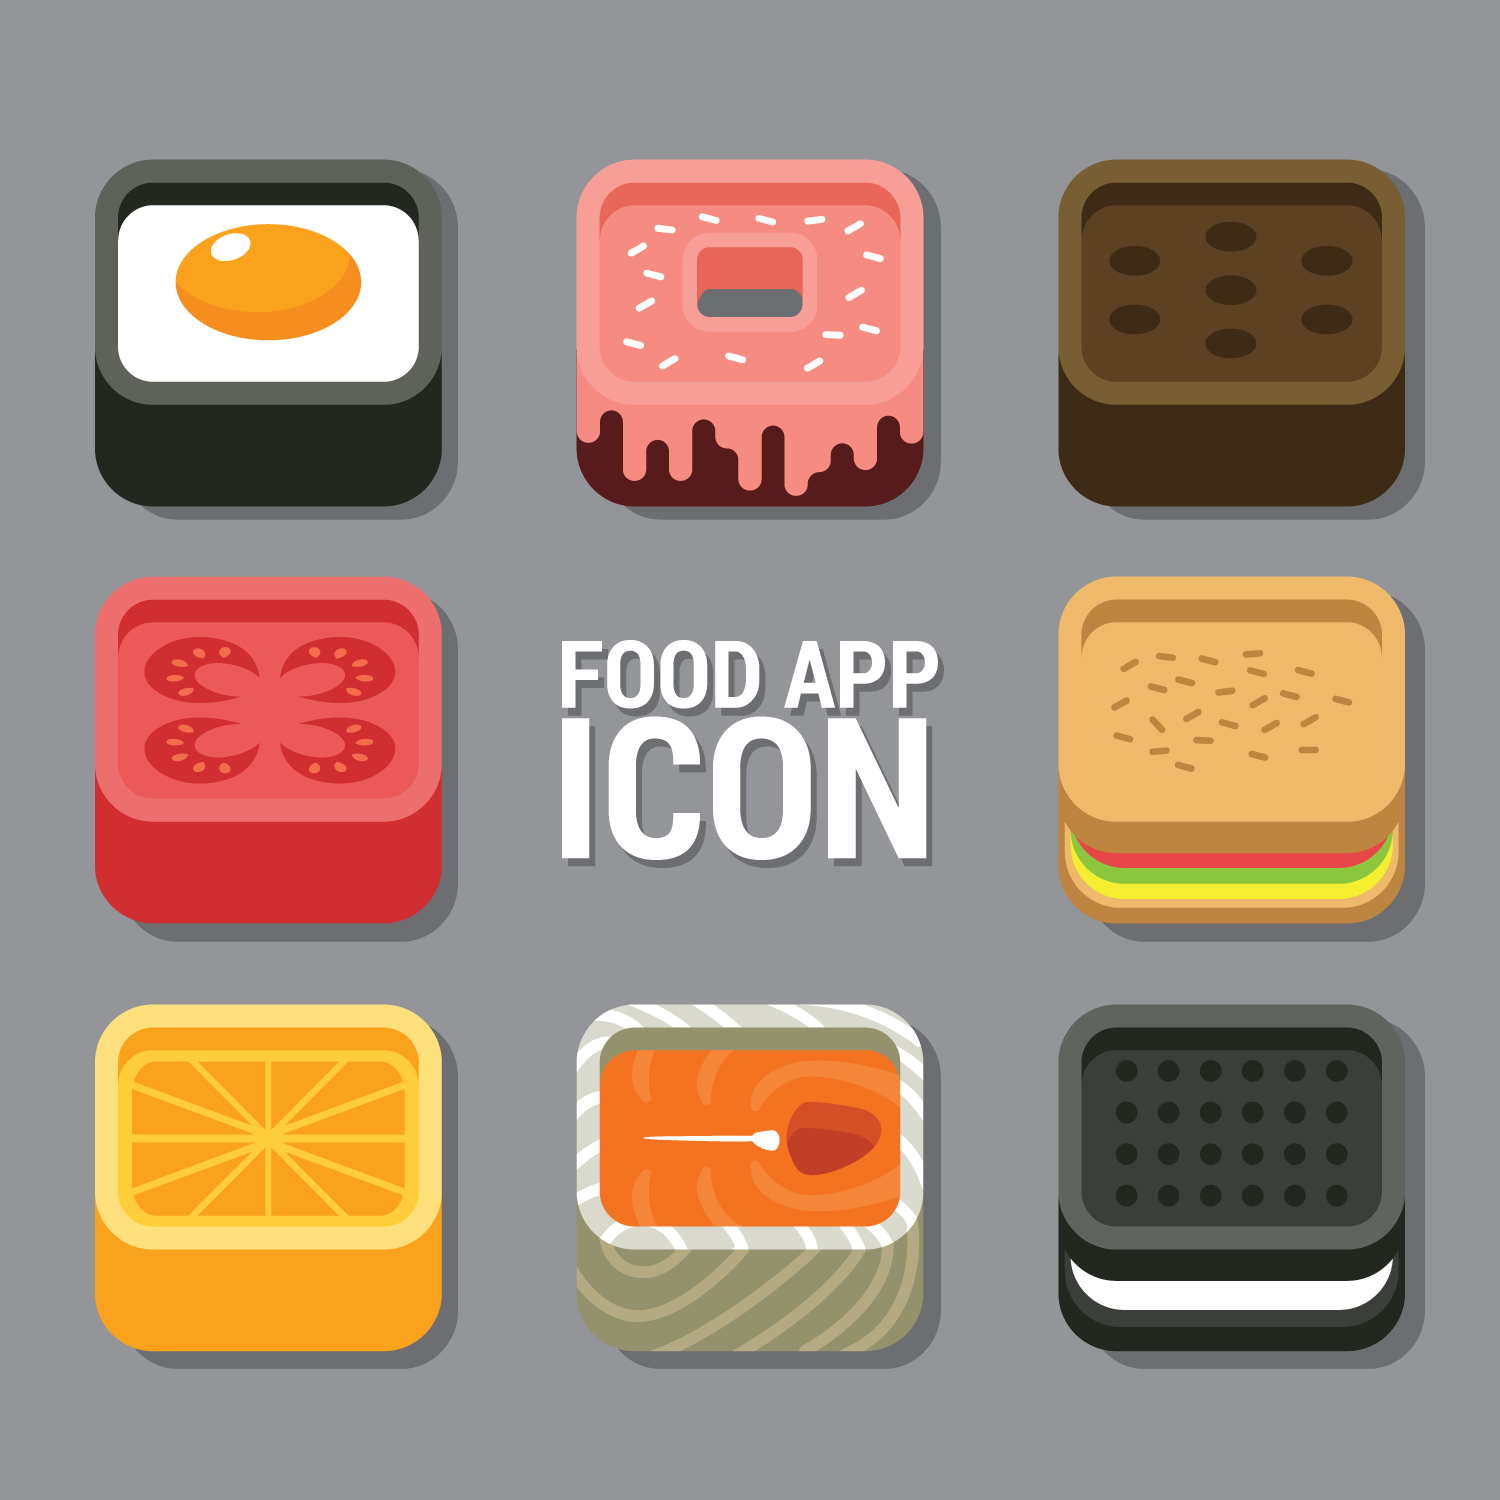 Download Food App Icon - Download Free Vectors, Clipart Graphics & Vector Art